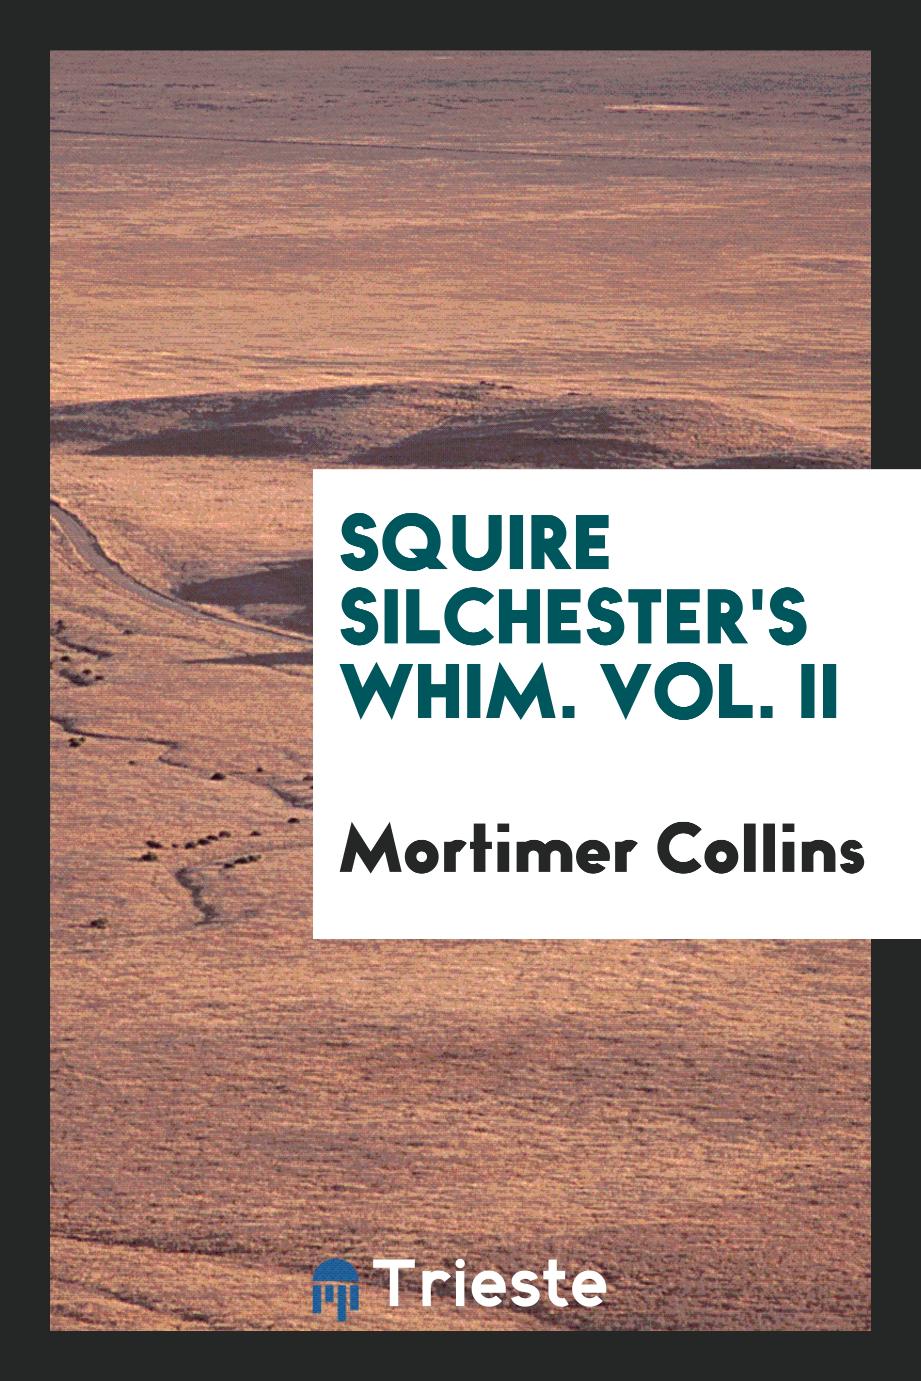 Squire Silchester's whim. Vol. II